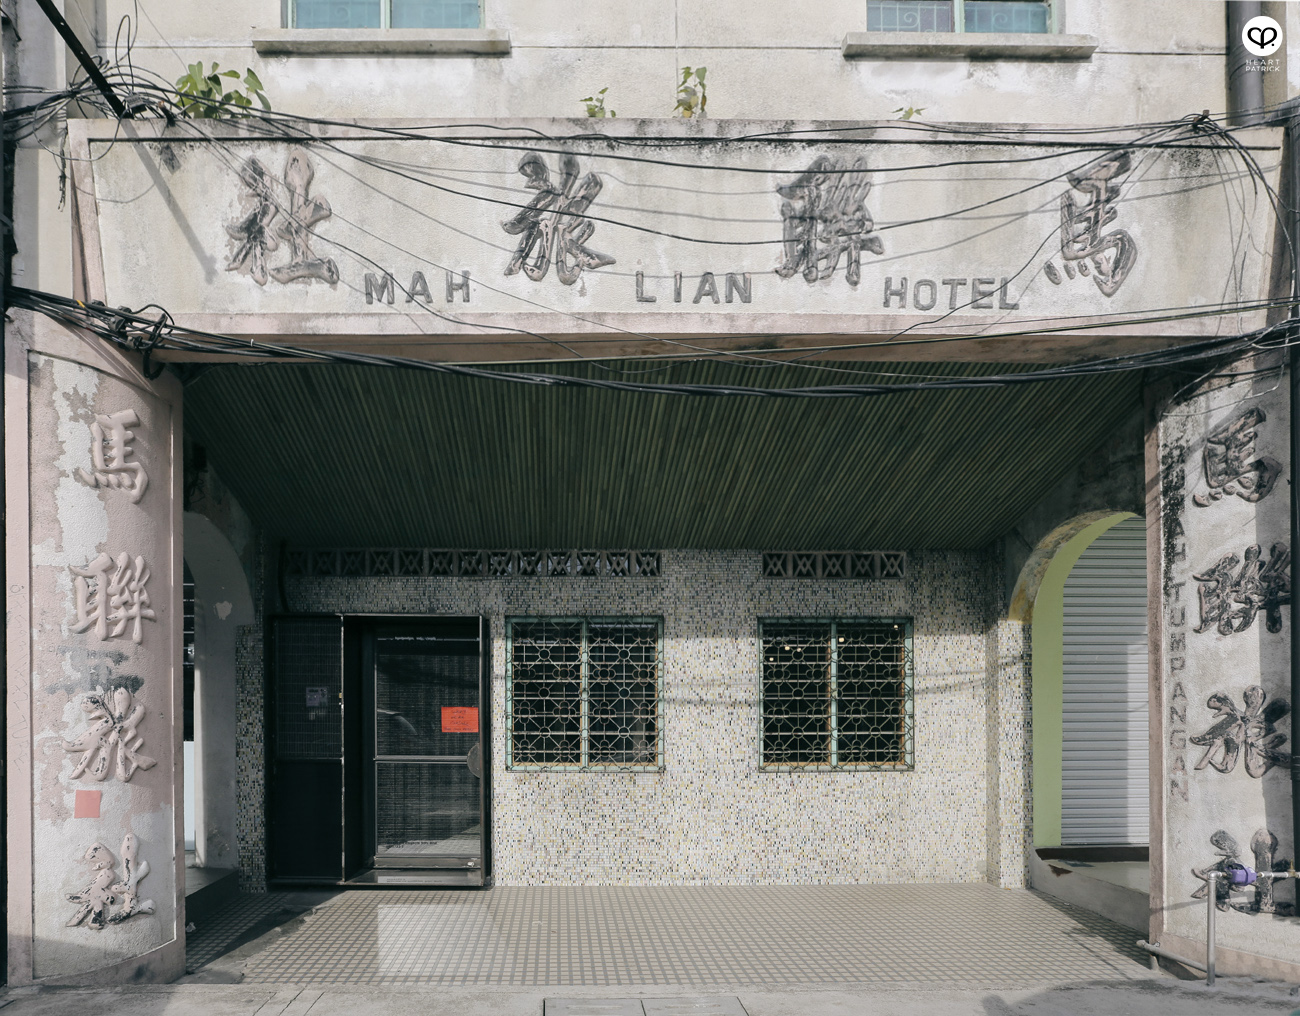 heartpatrick architecture chocha foodstore coworking vintage oldschool petaling street chinatown kuala lumpur